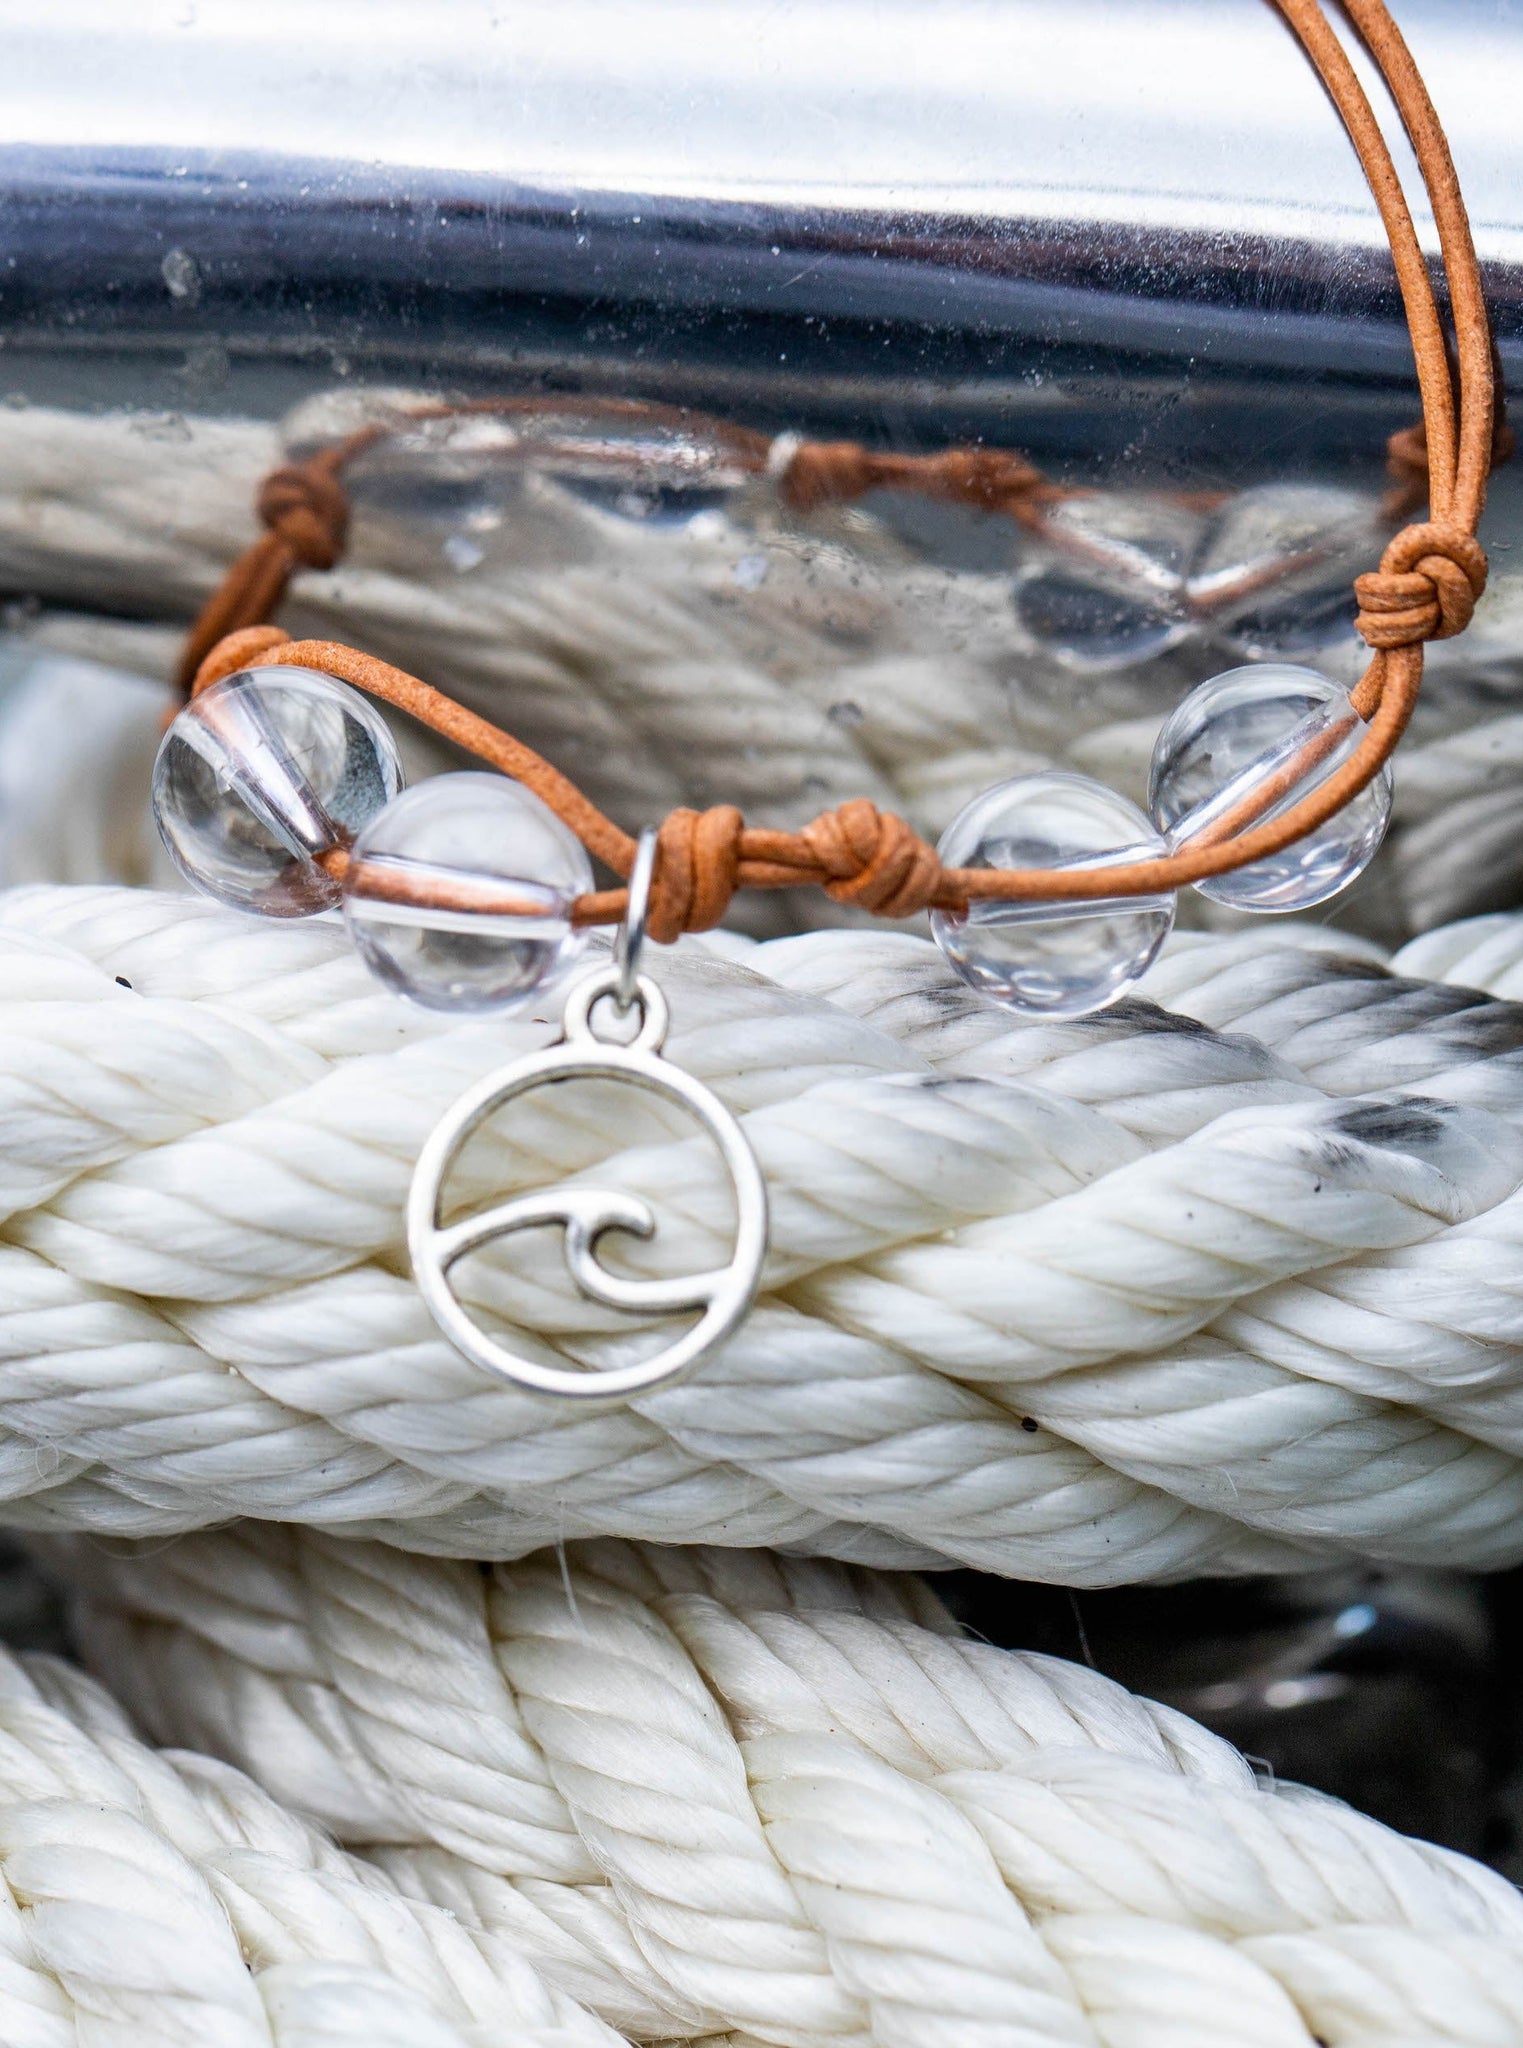 Fish Hook Charm Bracelet – Beneath The Waves Store